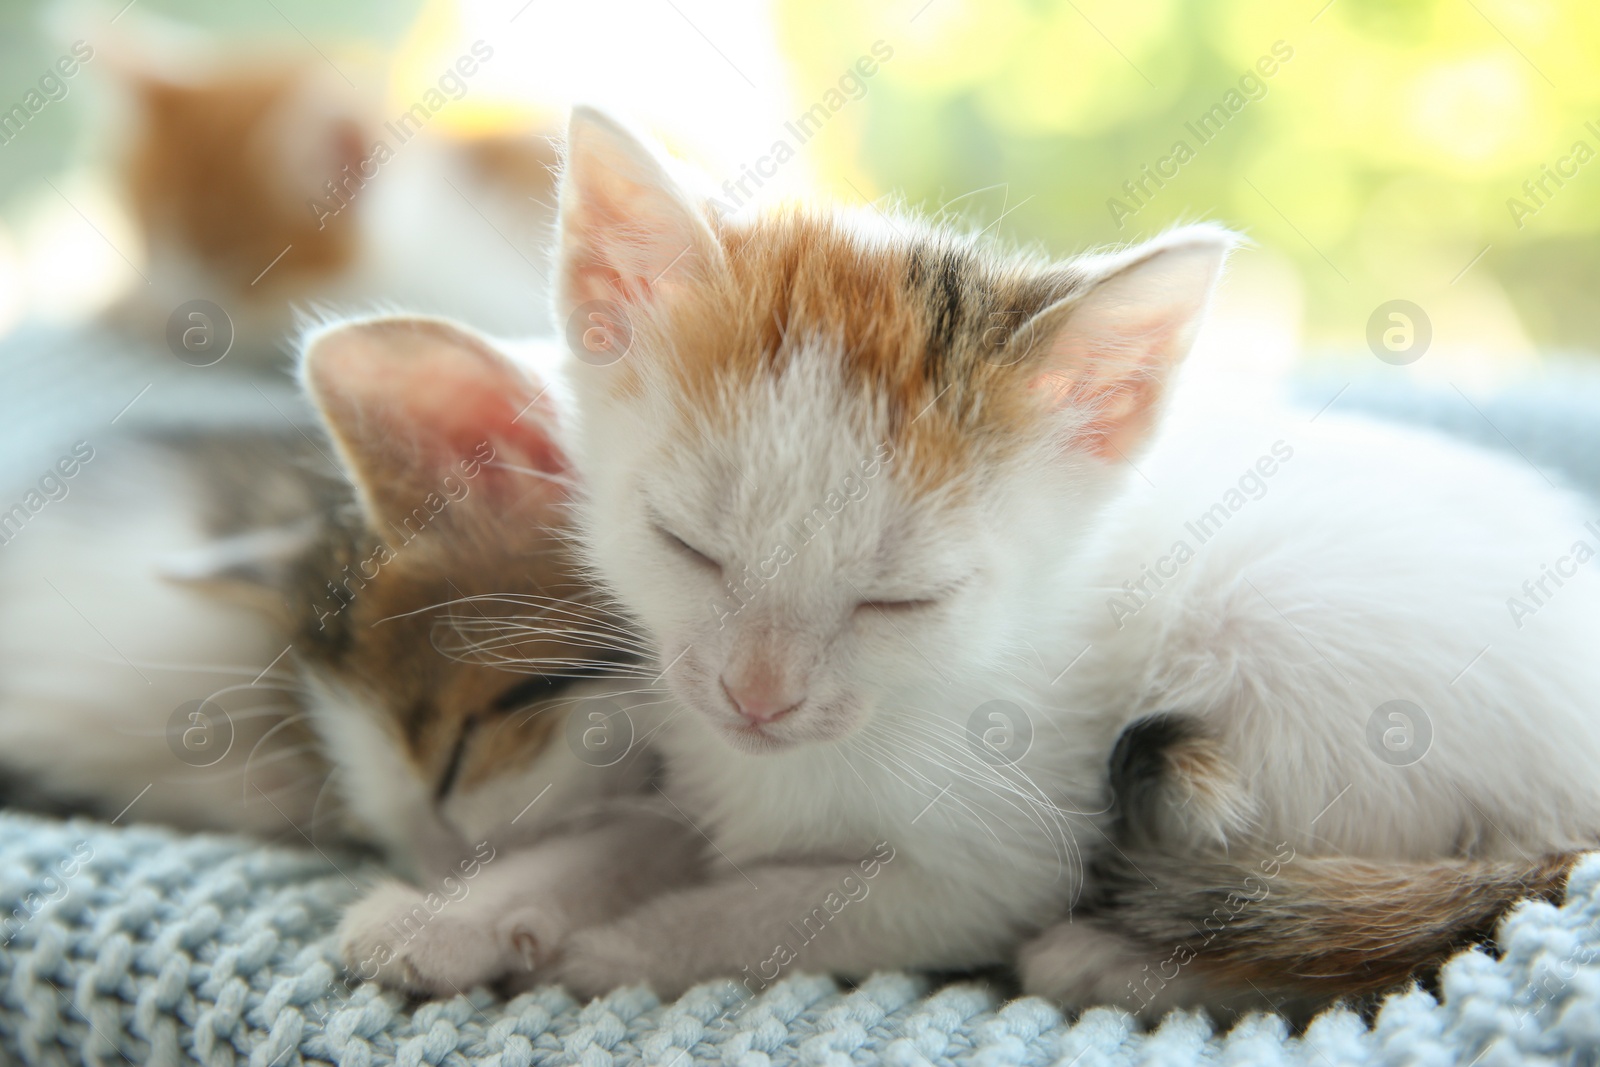 Photo of Cute little kittens sleeping on blue blanket, closeup. Baby animals